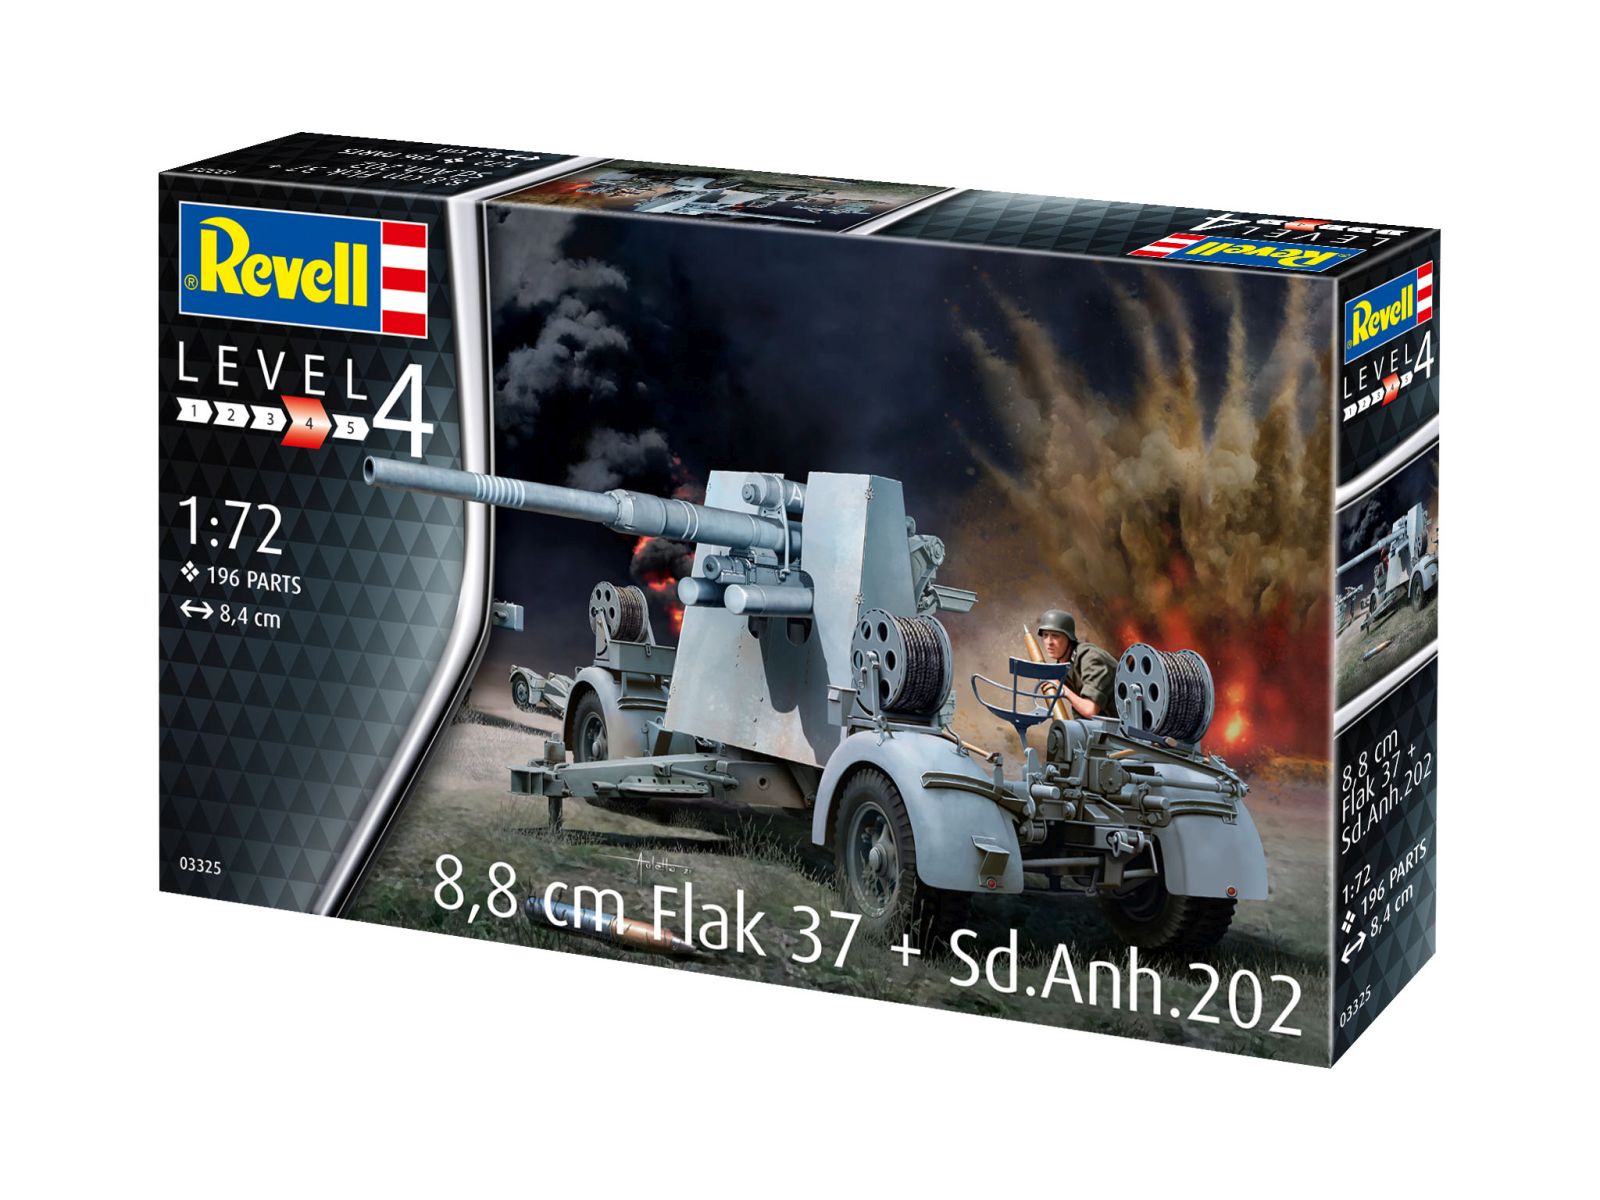 Revell 03325 - 8,8 cm Flak 37 + Sd.Anh.202